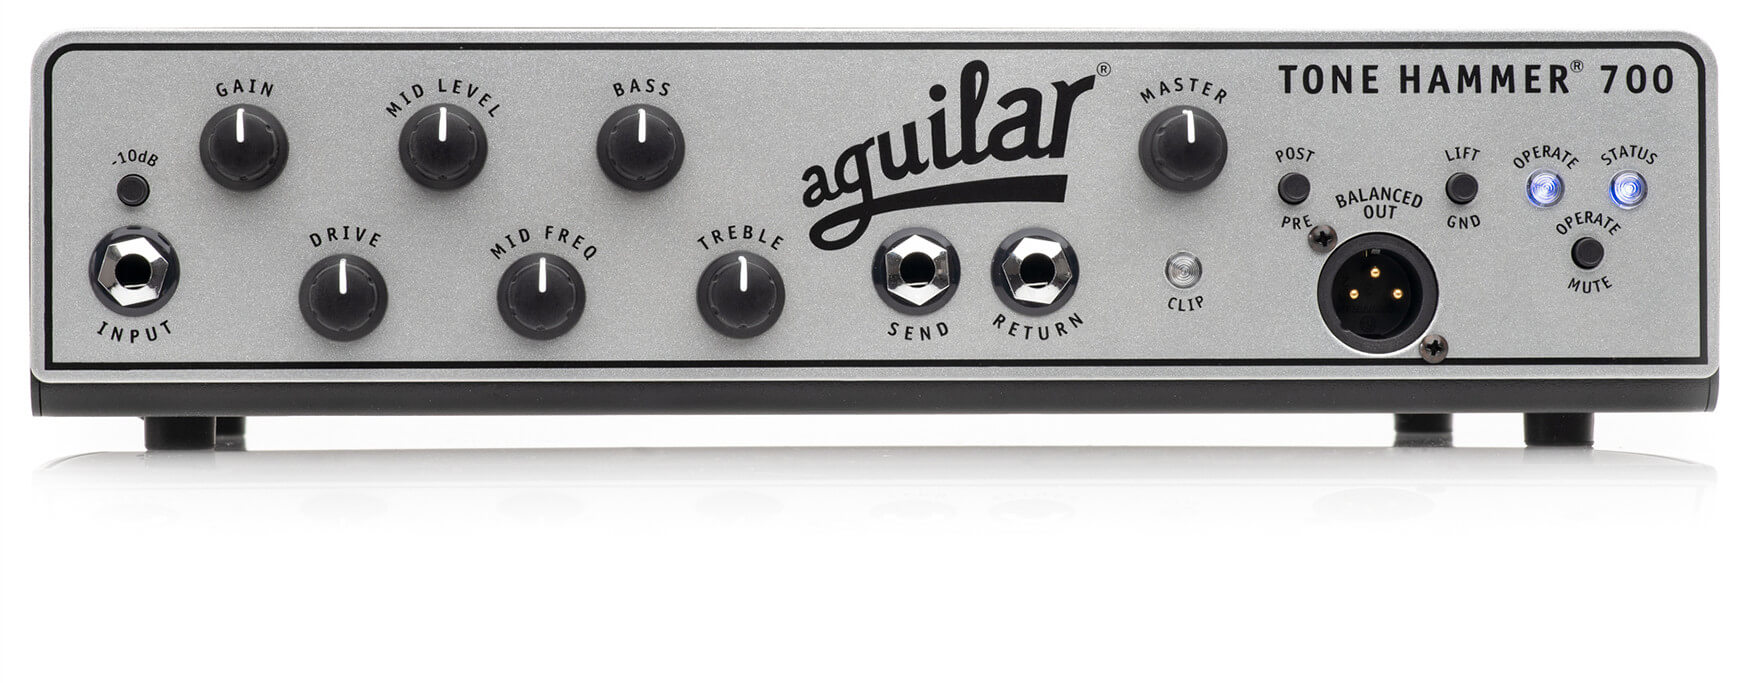 Tone Hammer 700 – Aguilar Amplification